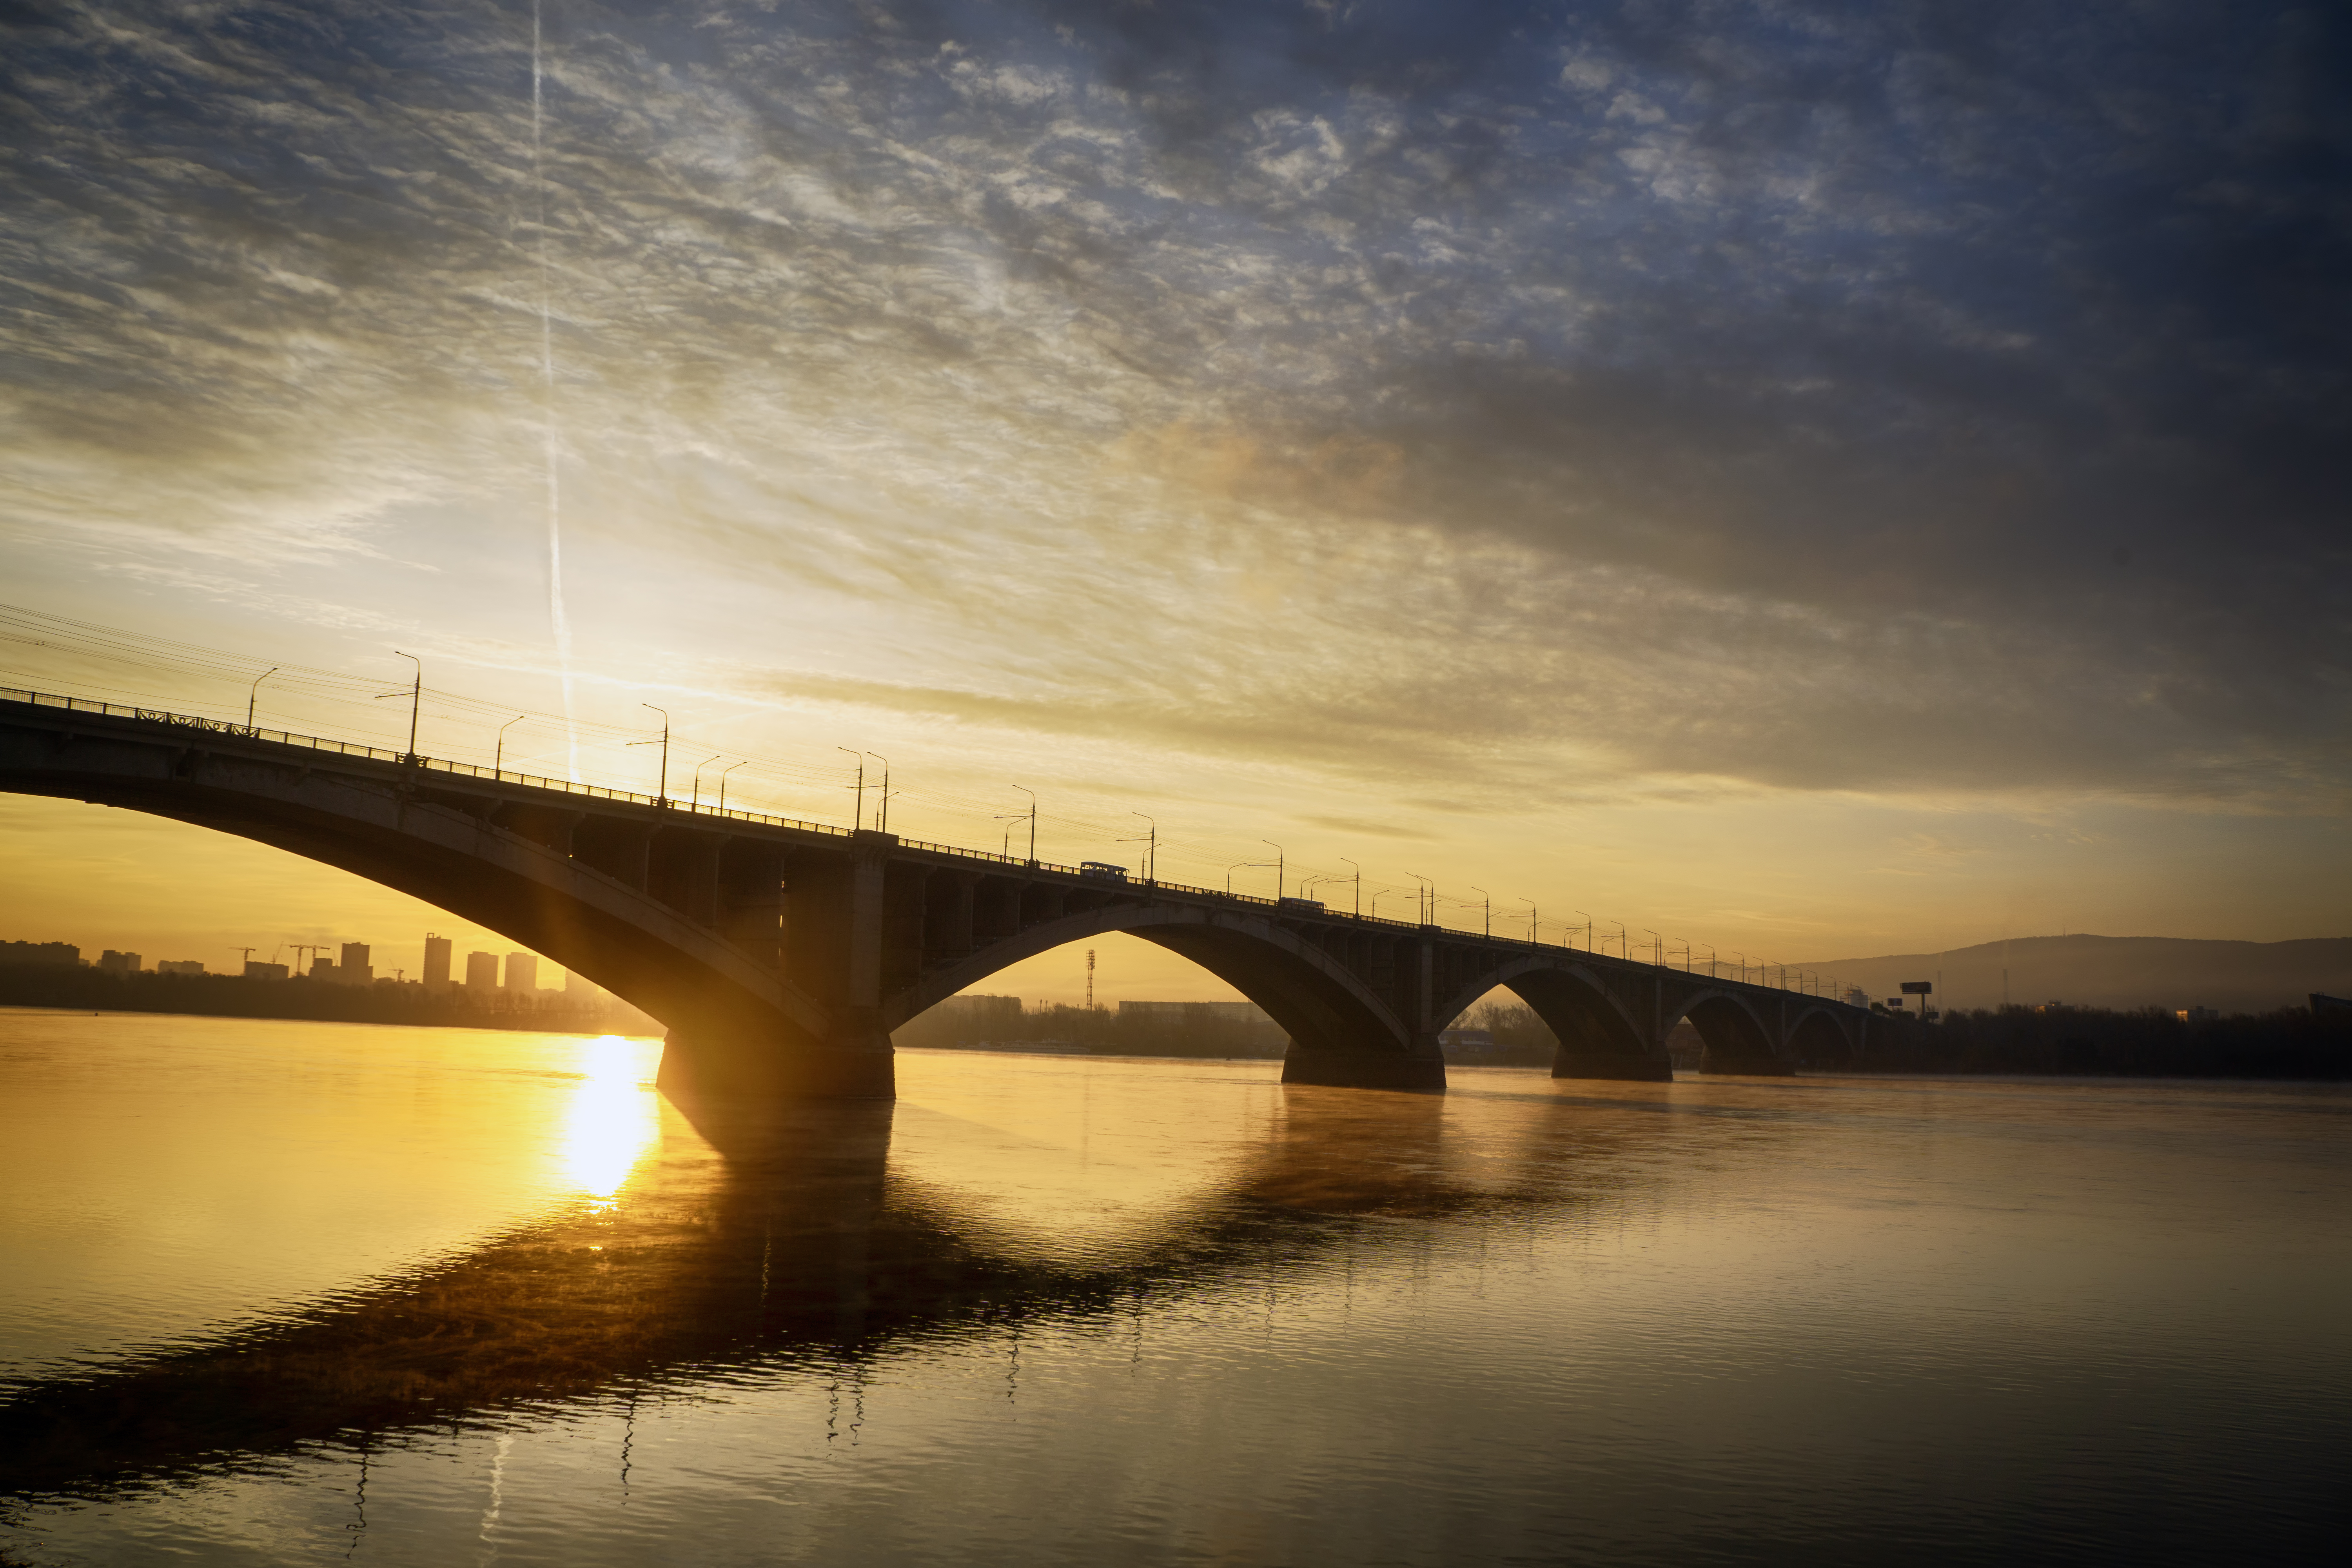 The bridge at dawn